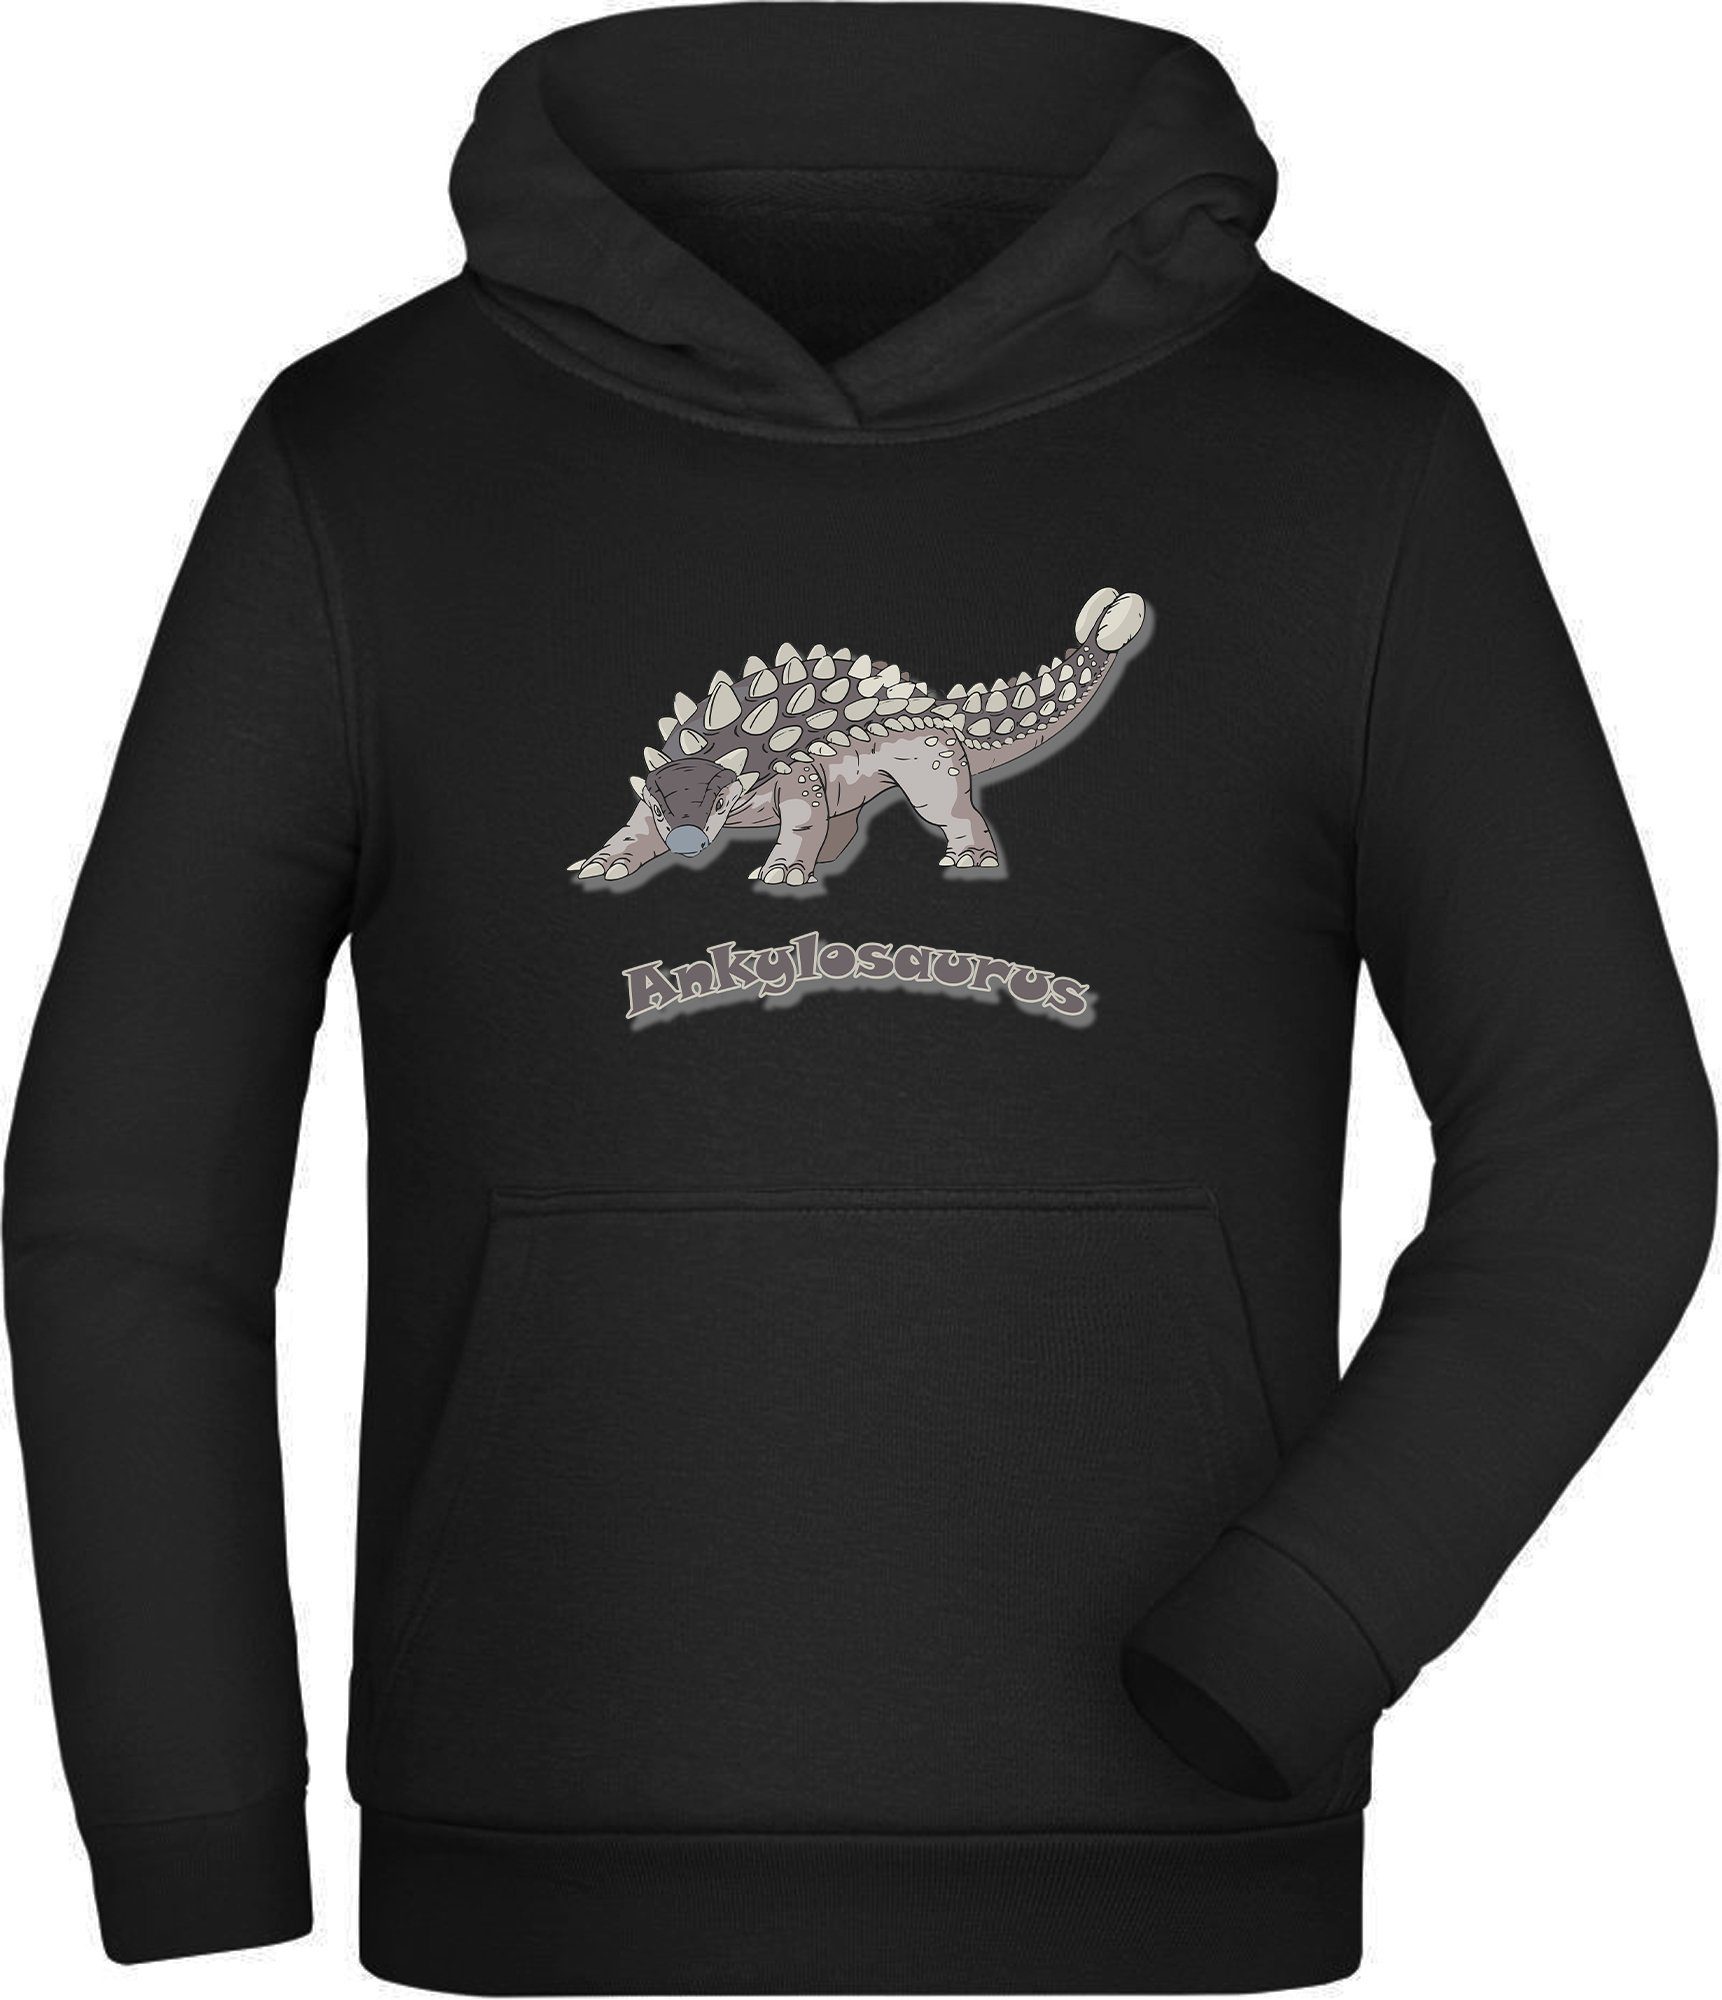 MyDesign24 Hoodie Kinder Kapuzen Sweatshirt - Mit Ankylosaurus Kapuzensweater mit Aufdruck, i63